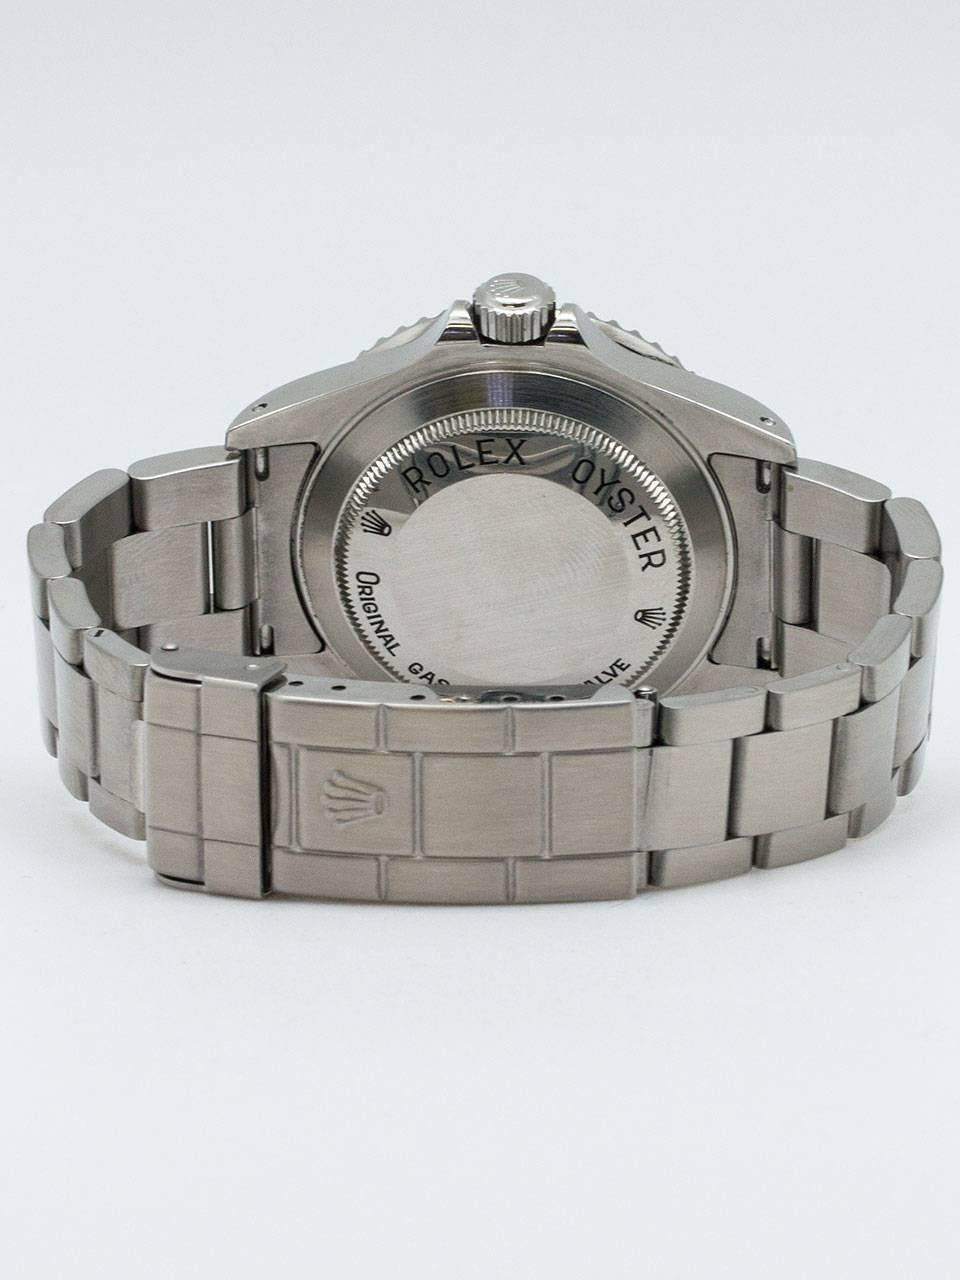 Men's Rolex Stainless Steel Sea-Dweller Wristwatch ref 16600 Box & Papers